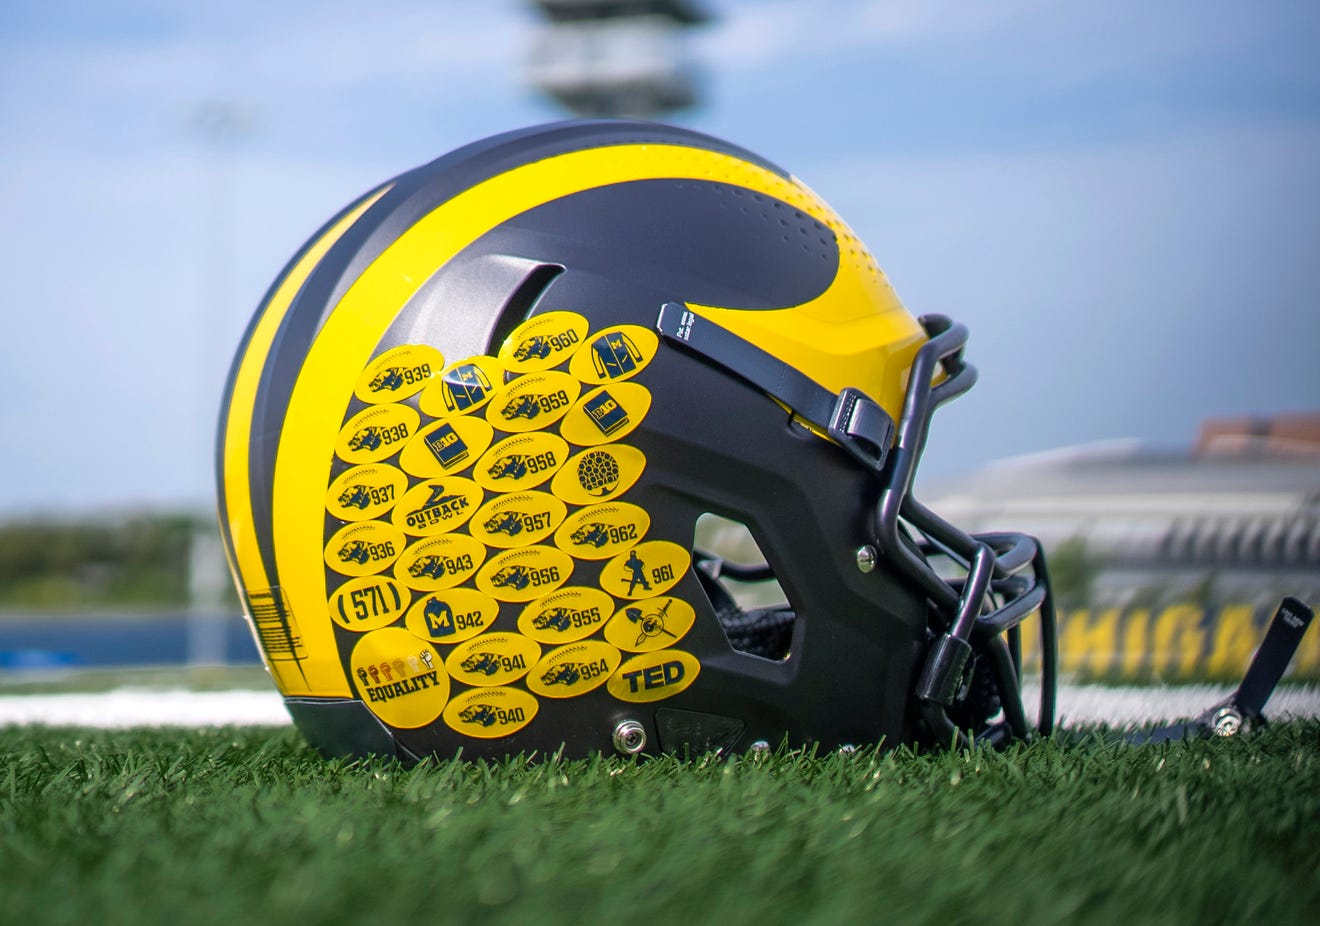 the university of michigan football team's new helmet merit decals for 2021